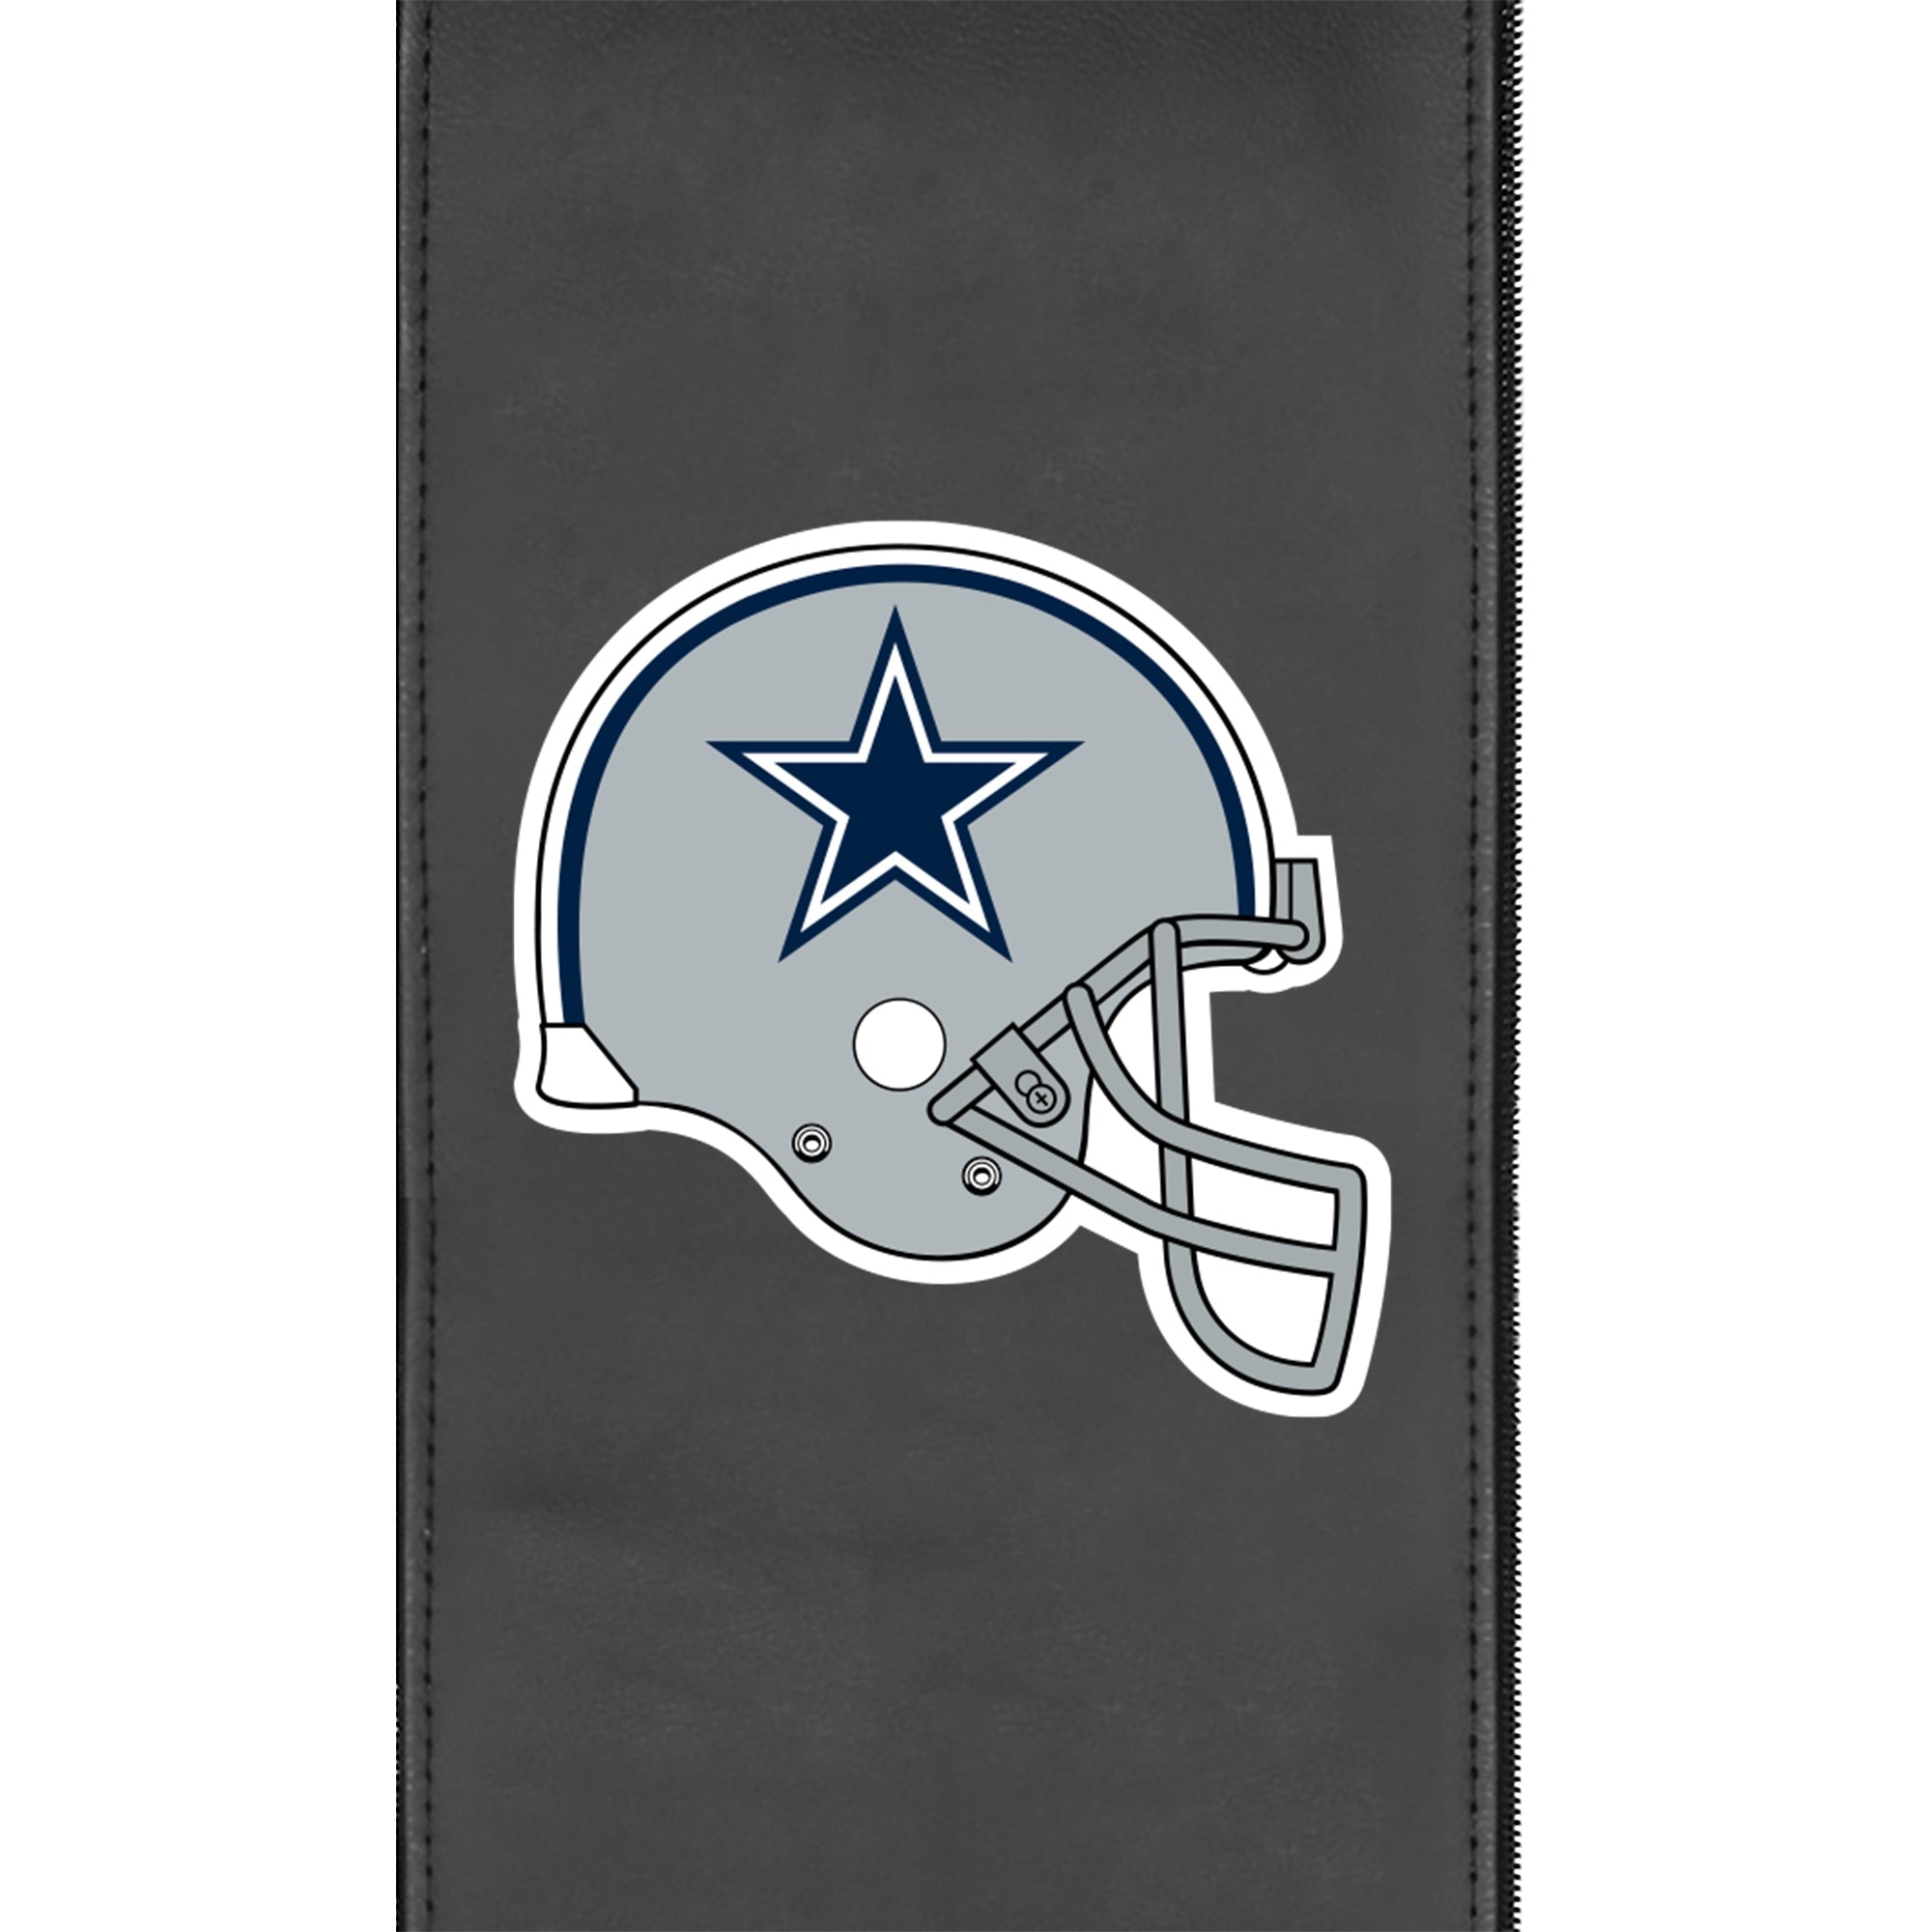 Stealth Power Plus Recliner with Dallas Cowboys Helmet Logo